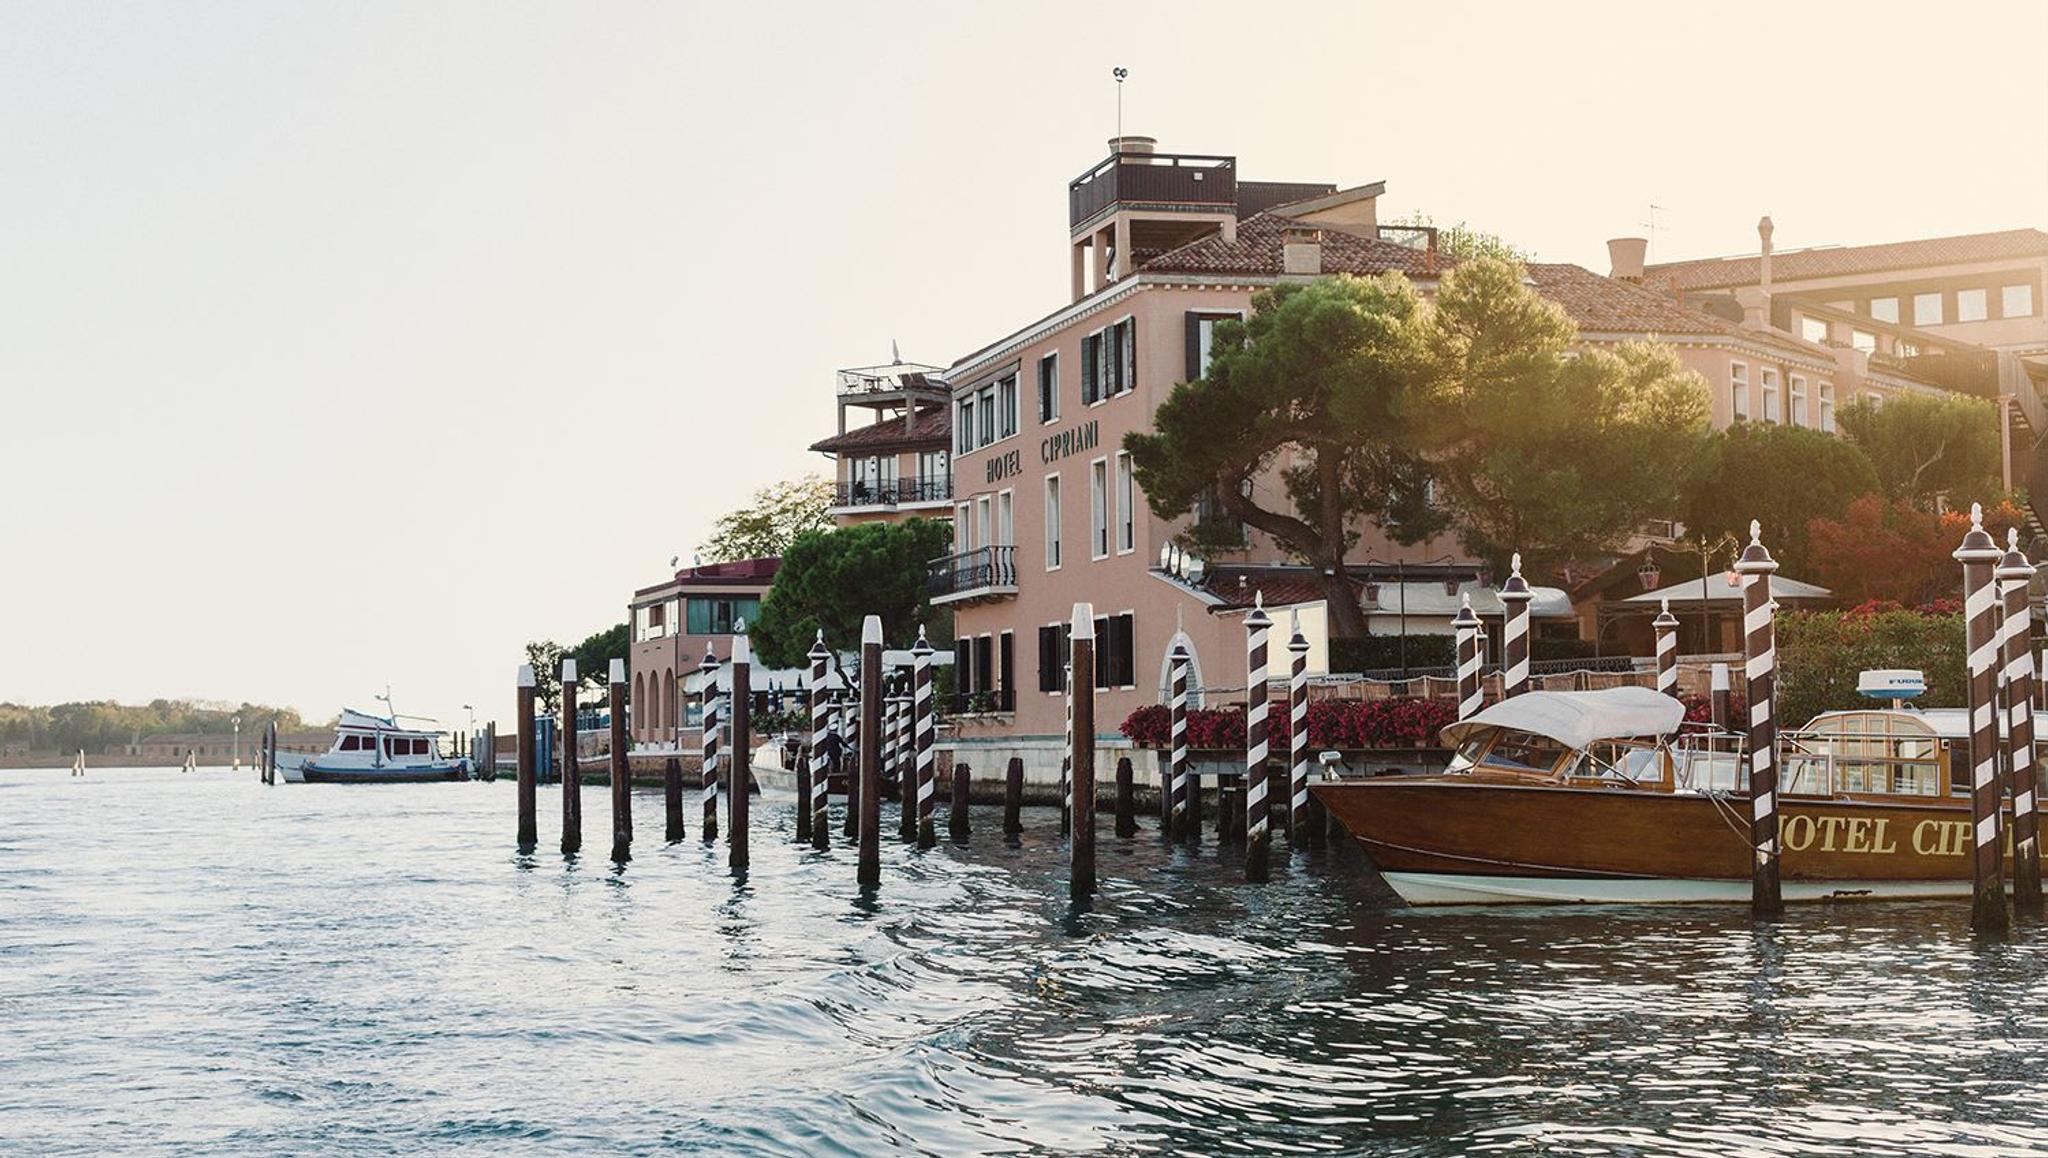 Hotel Cipriani: Shimmering Elegance in Venice